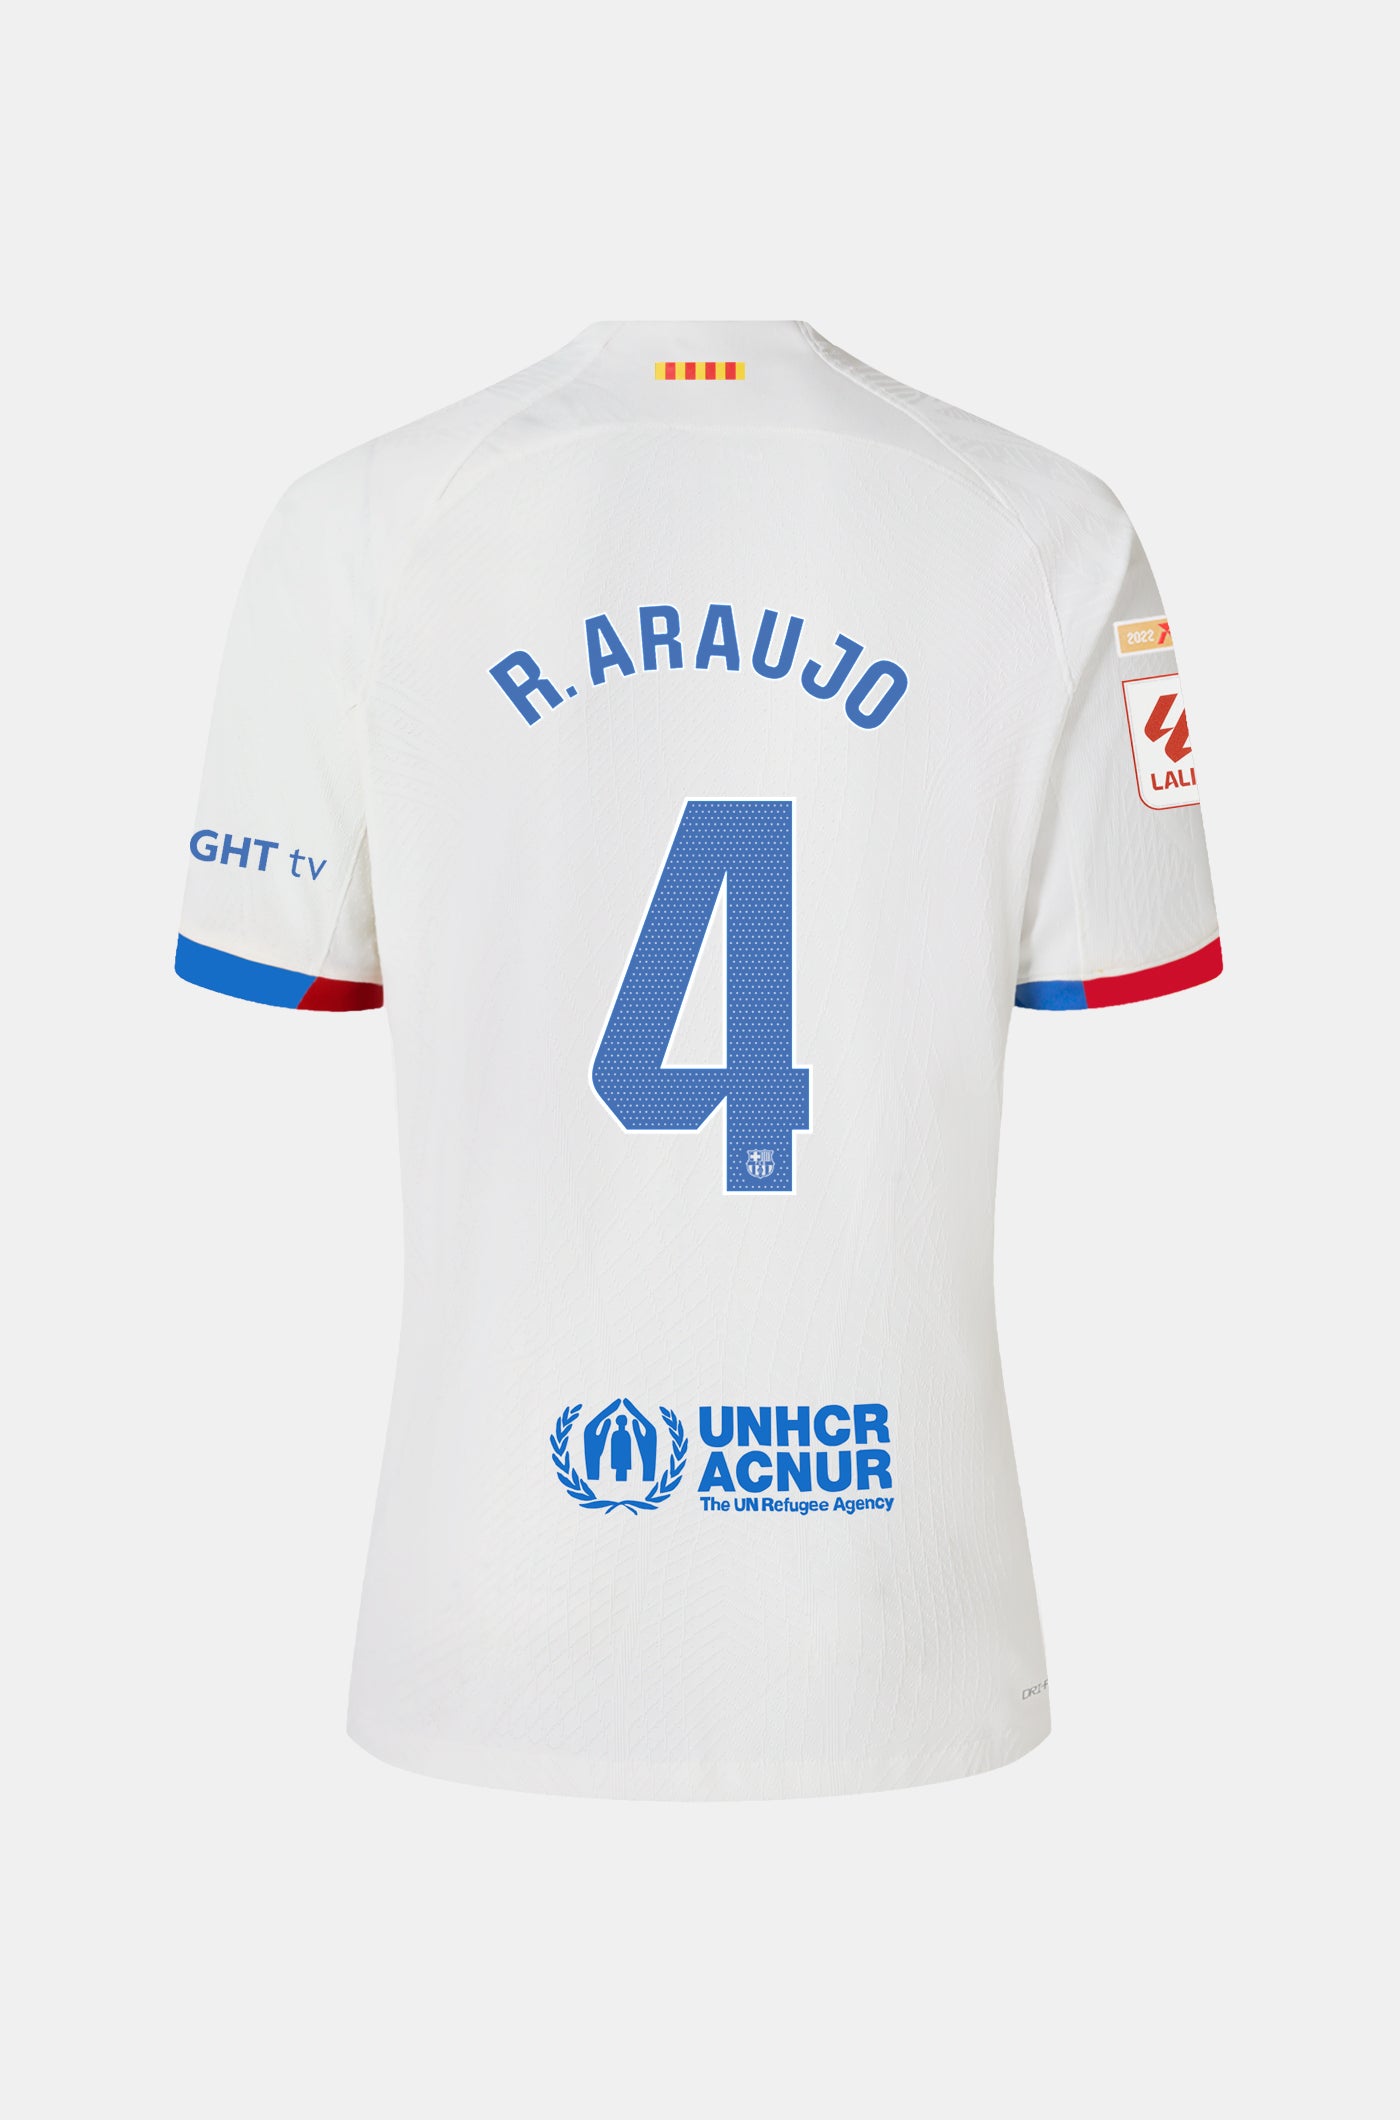 LFP FC Barcelona Away Shirt 23/24 Player’s Edition - Women - R. ARAUJO